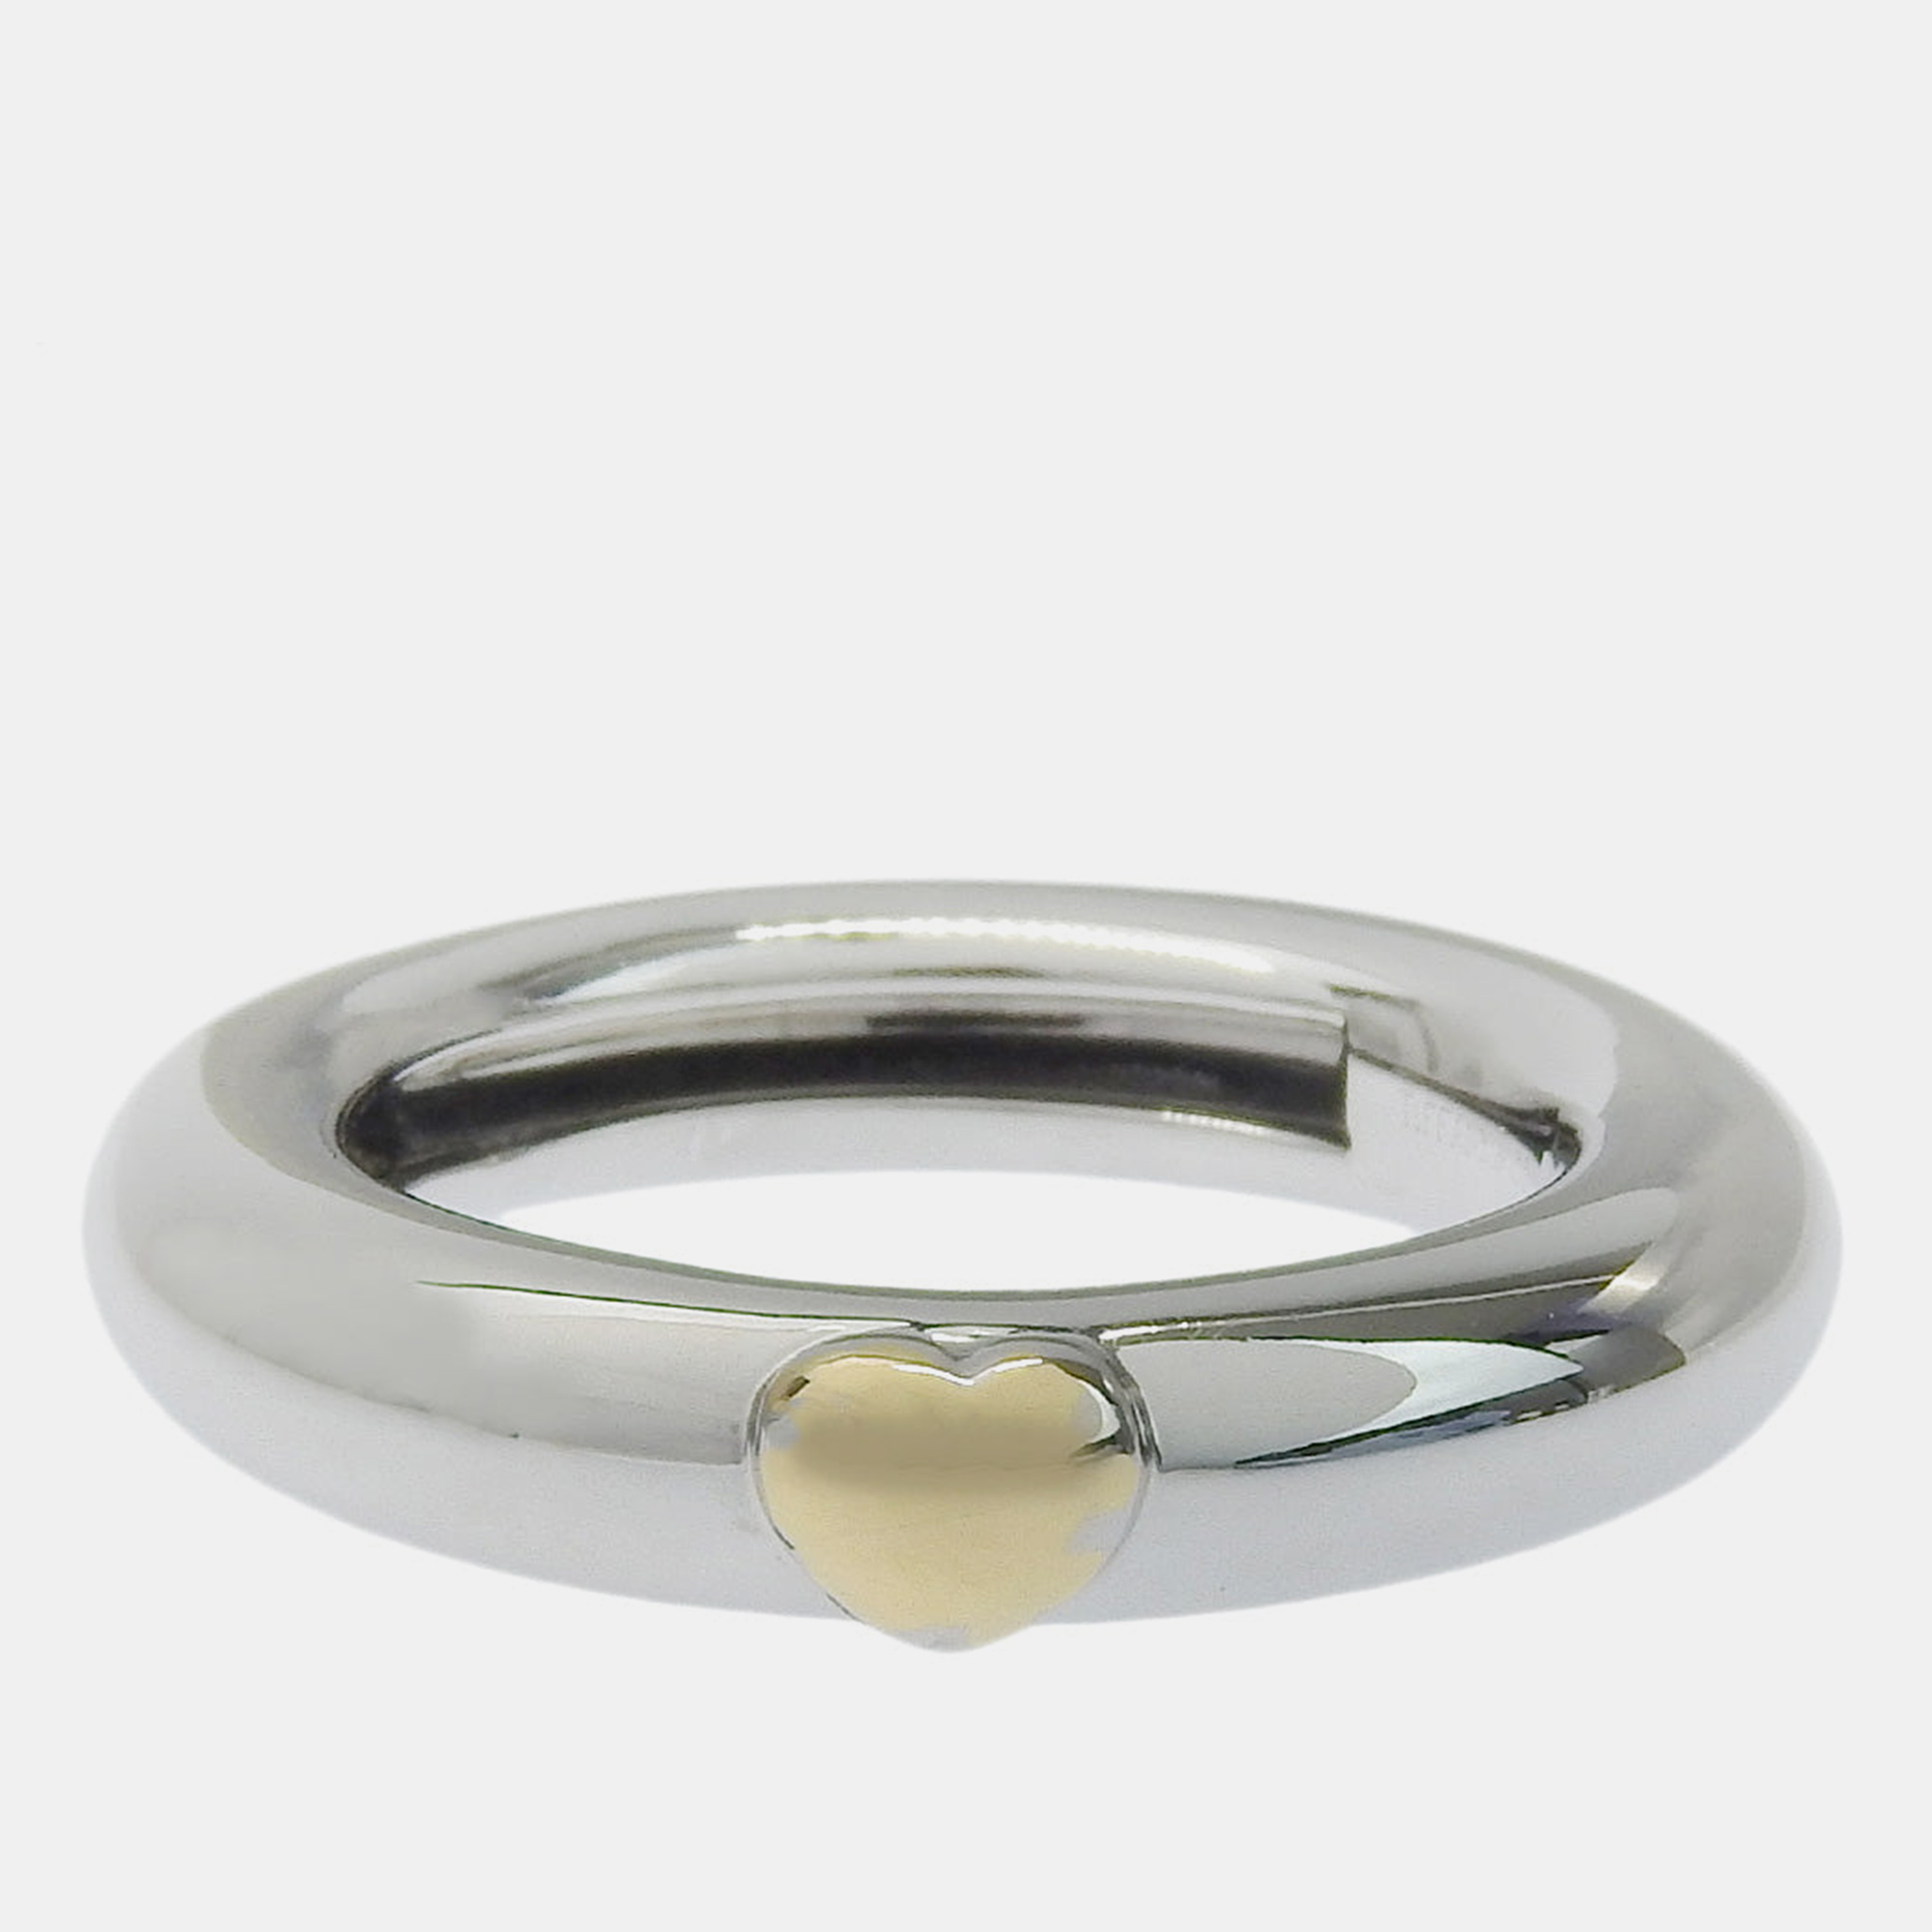 Tiffany & co. 18k white gold heart ring eu 48